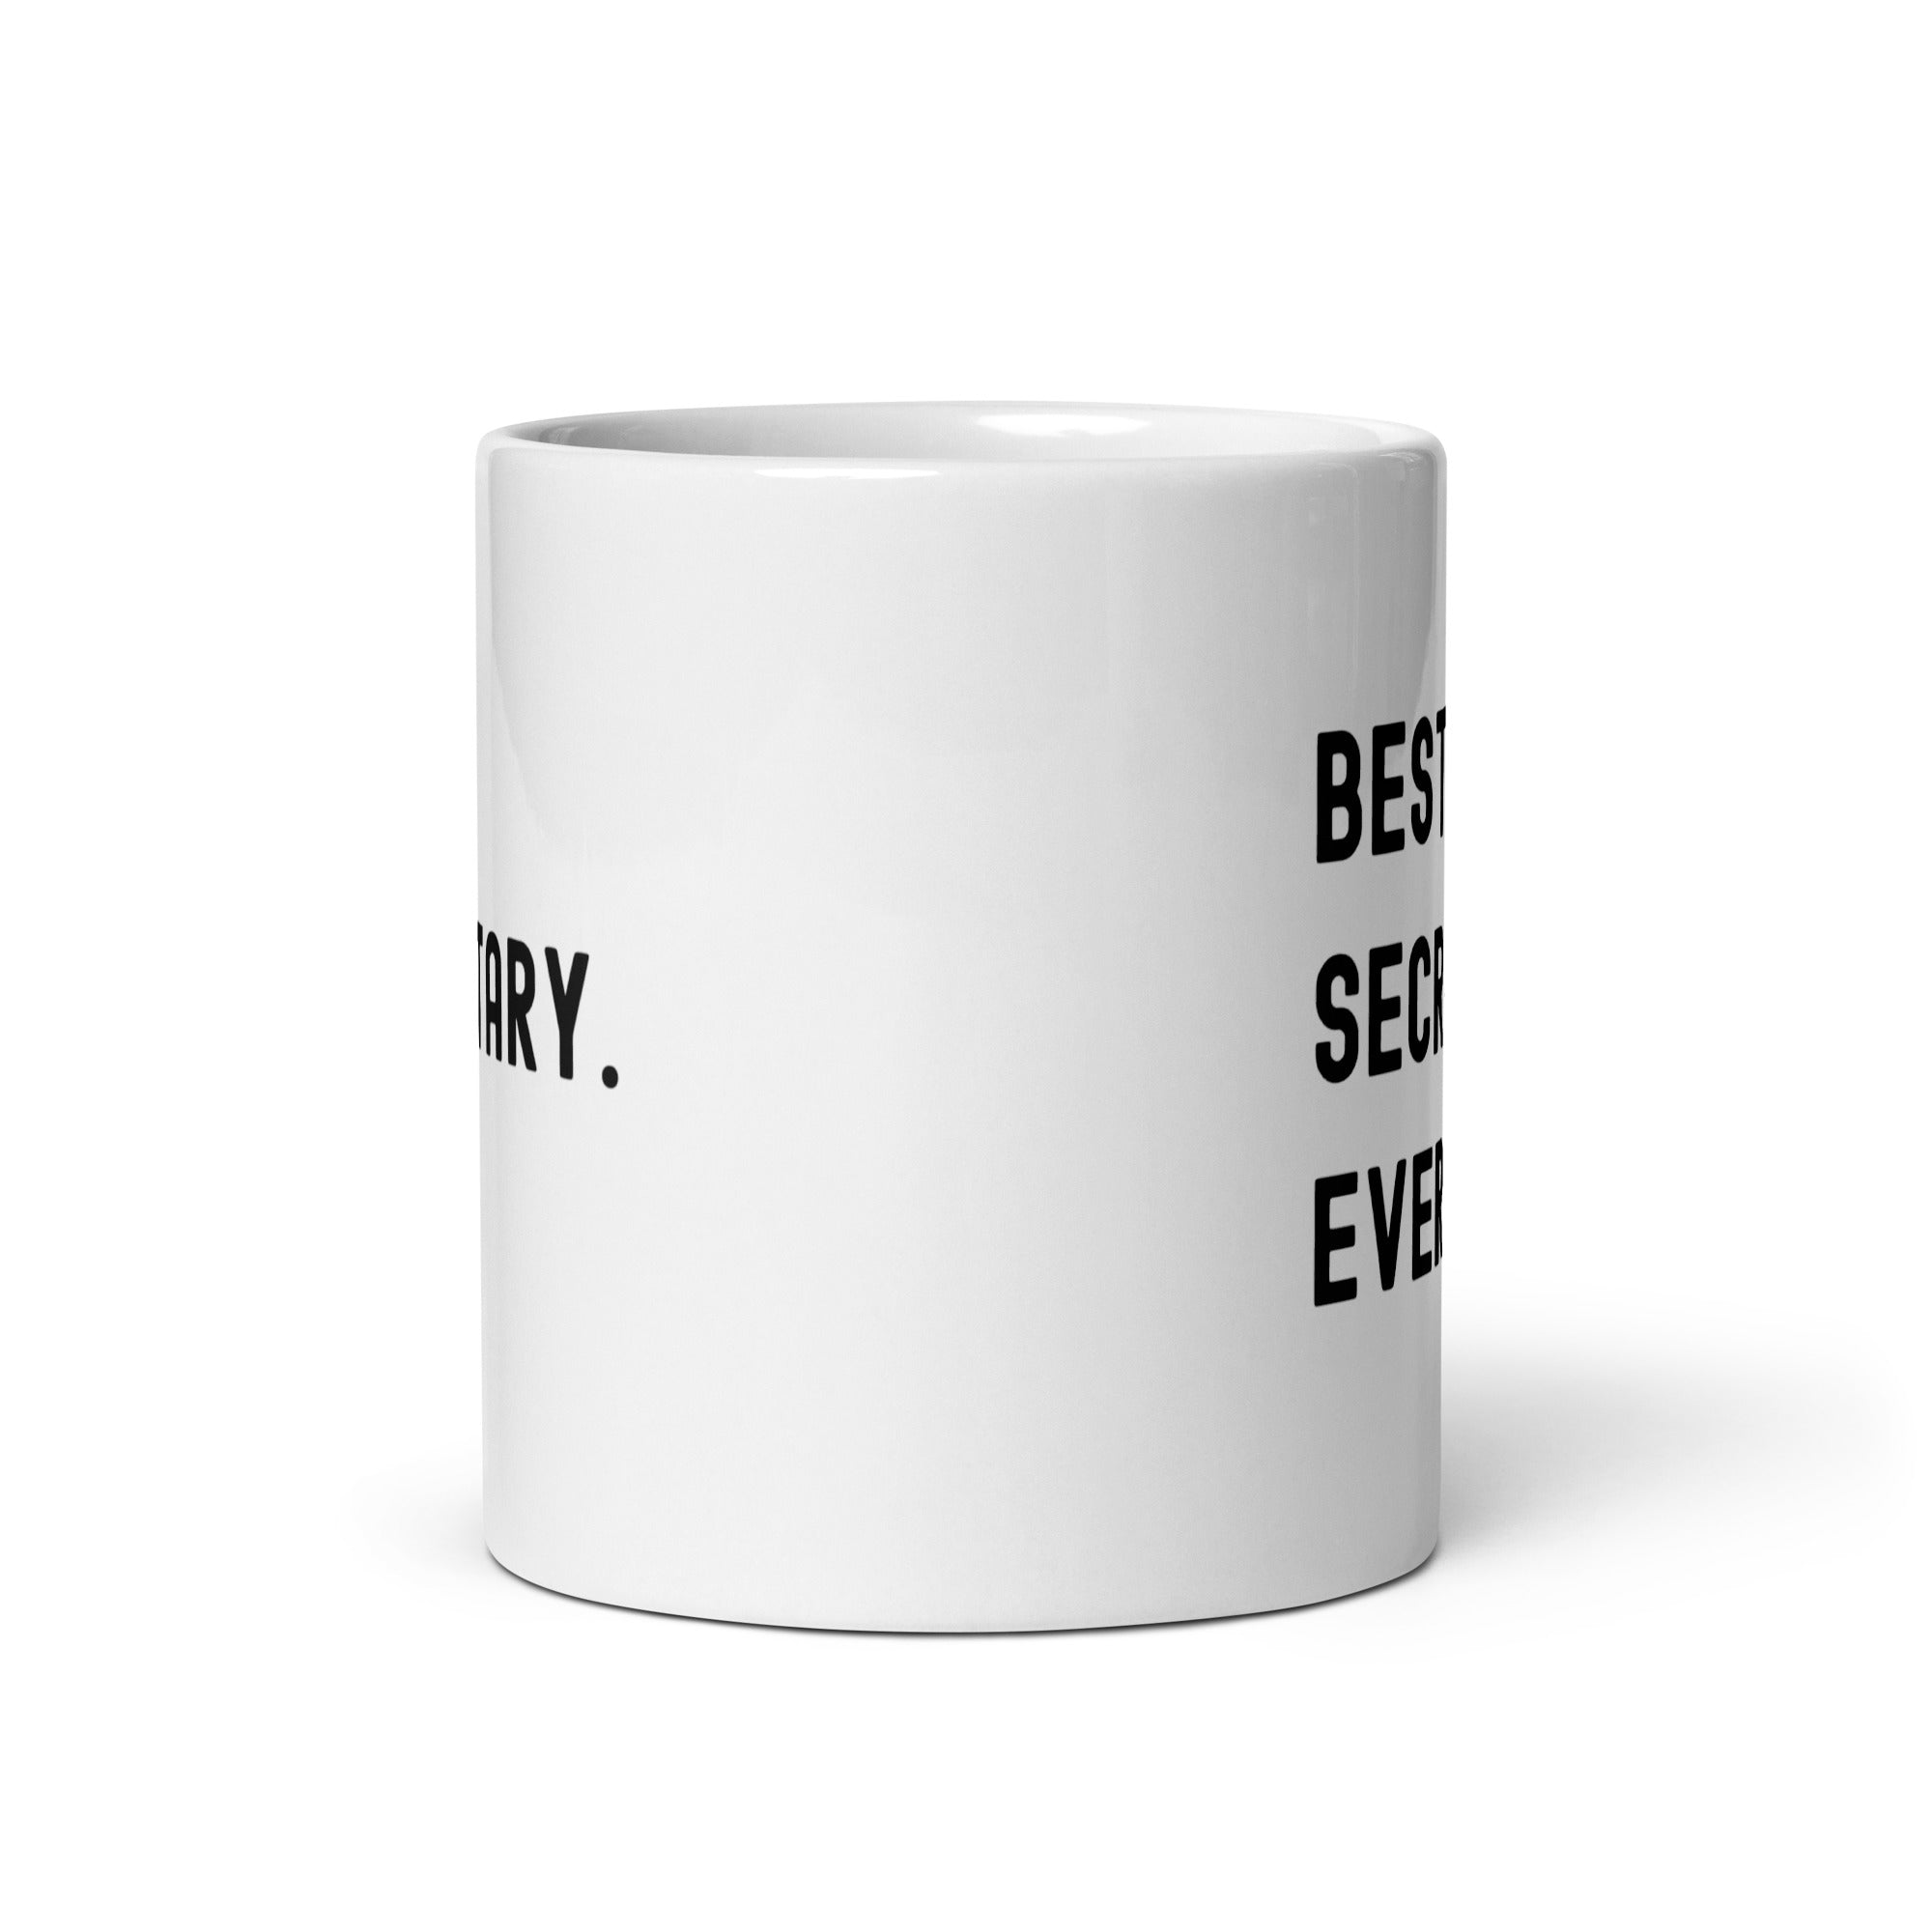 White glossy mug | Best. Secretary. Ever.